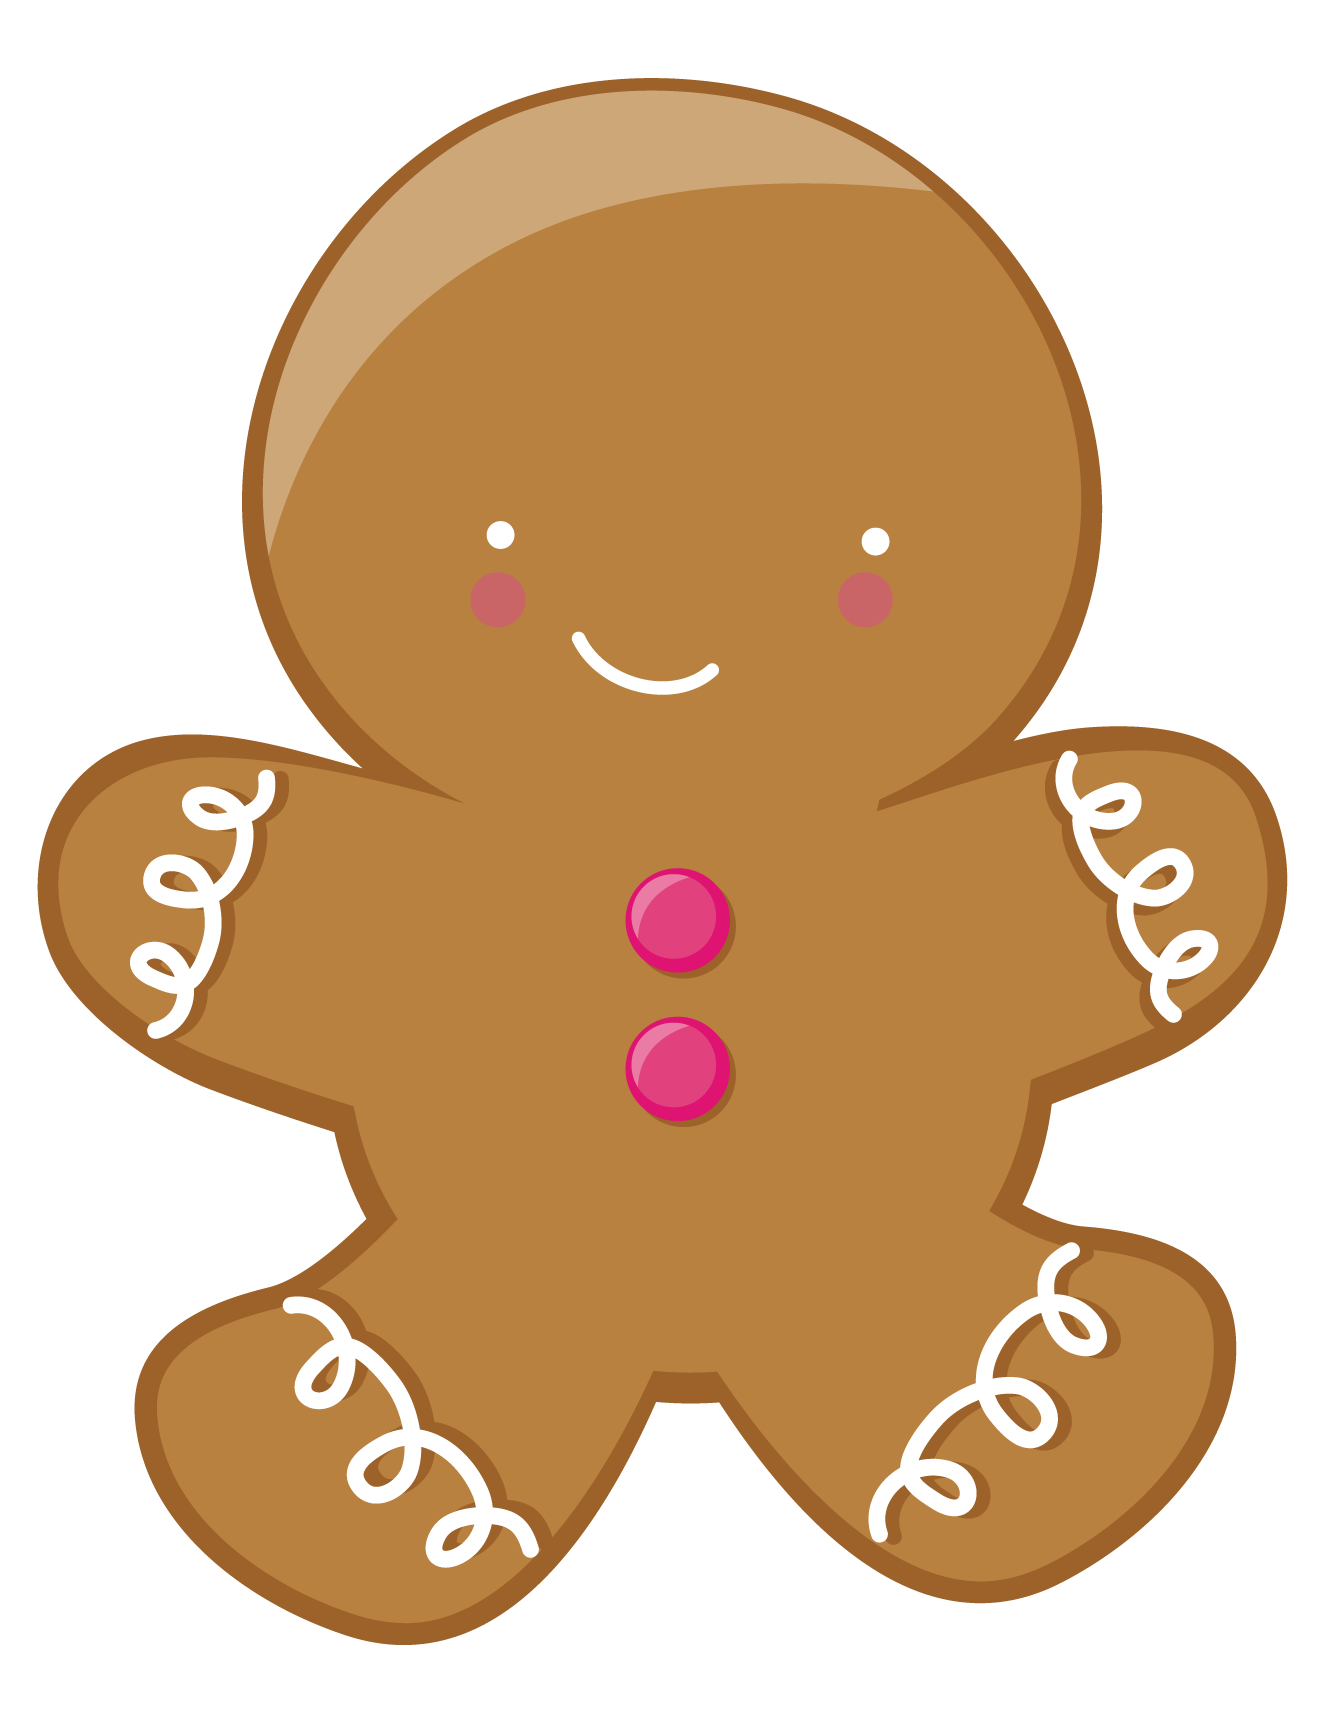 Gingerbread clipart character. Photo by daniellemoraesfalcao minus